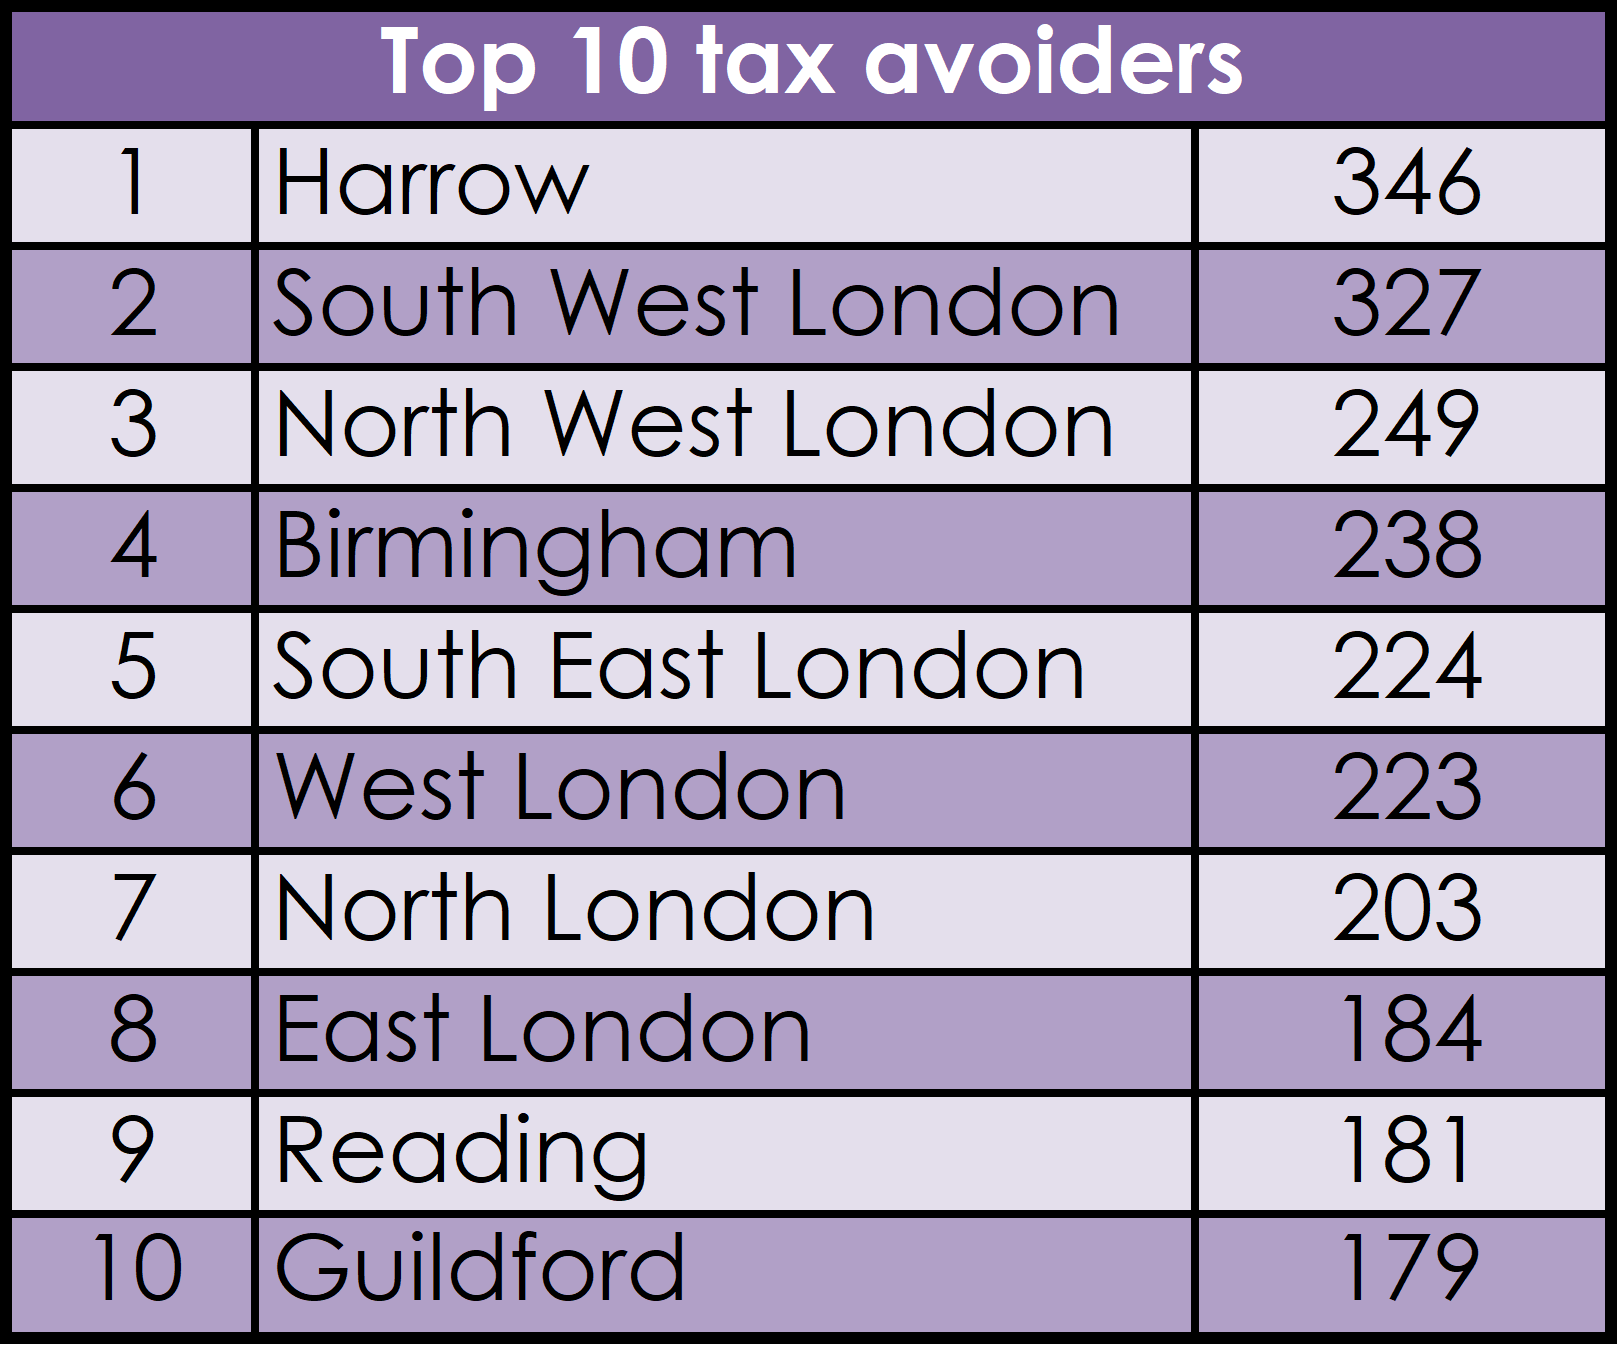 Top 10 tax avoiders